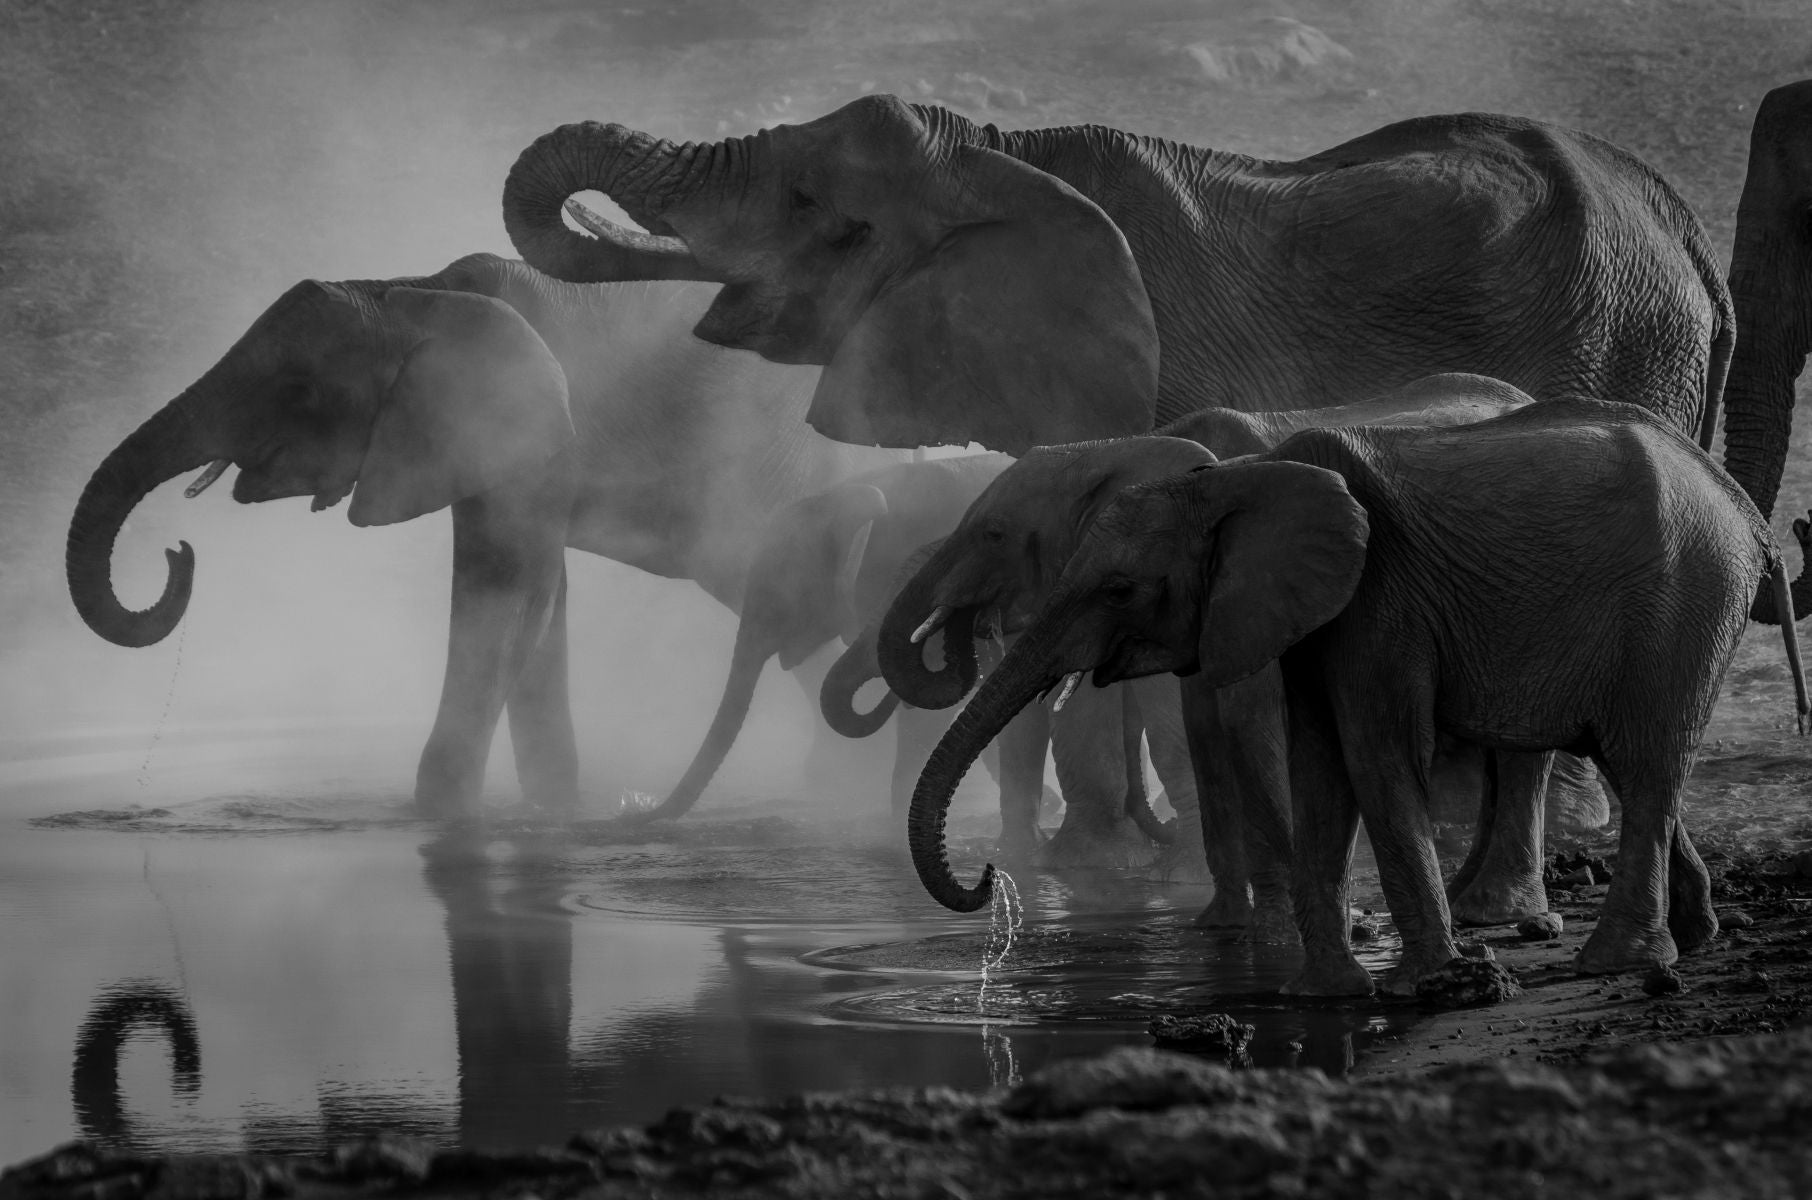 Africa - Elephants